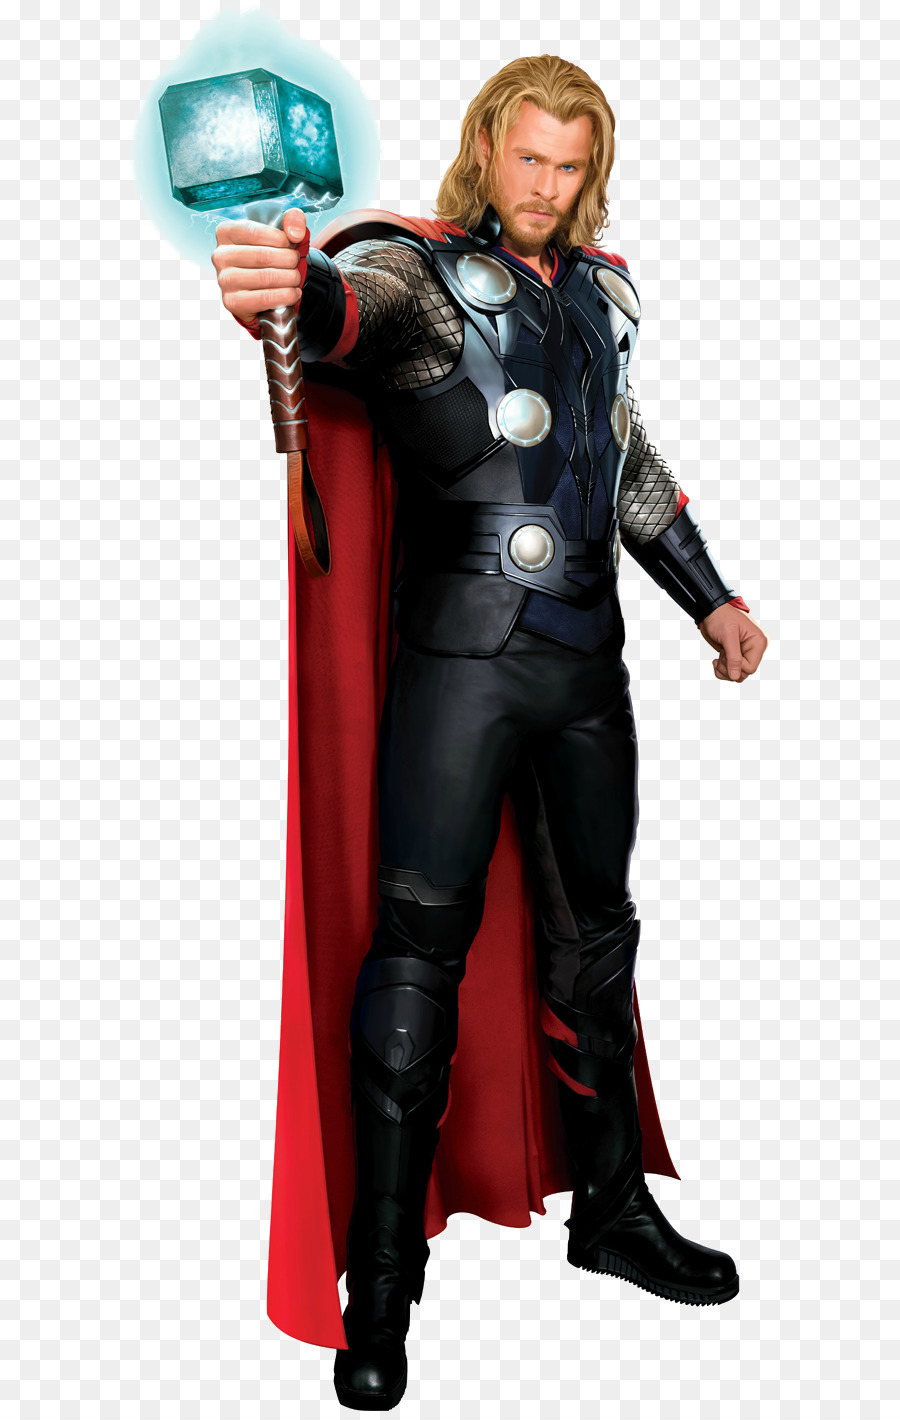 Chris Hemsworth Thor Captain America Loki Odin - Avengers png download - 643*1411 - Free Transparent  png Download.